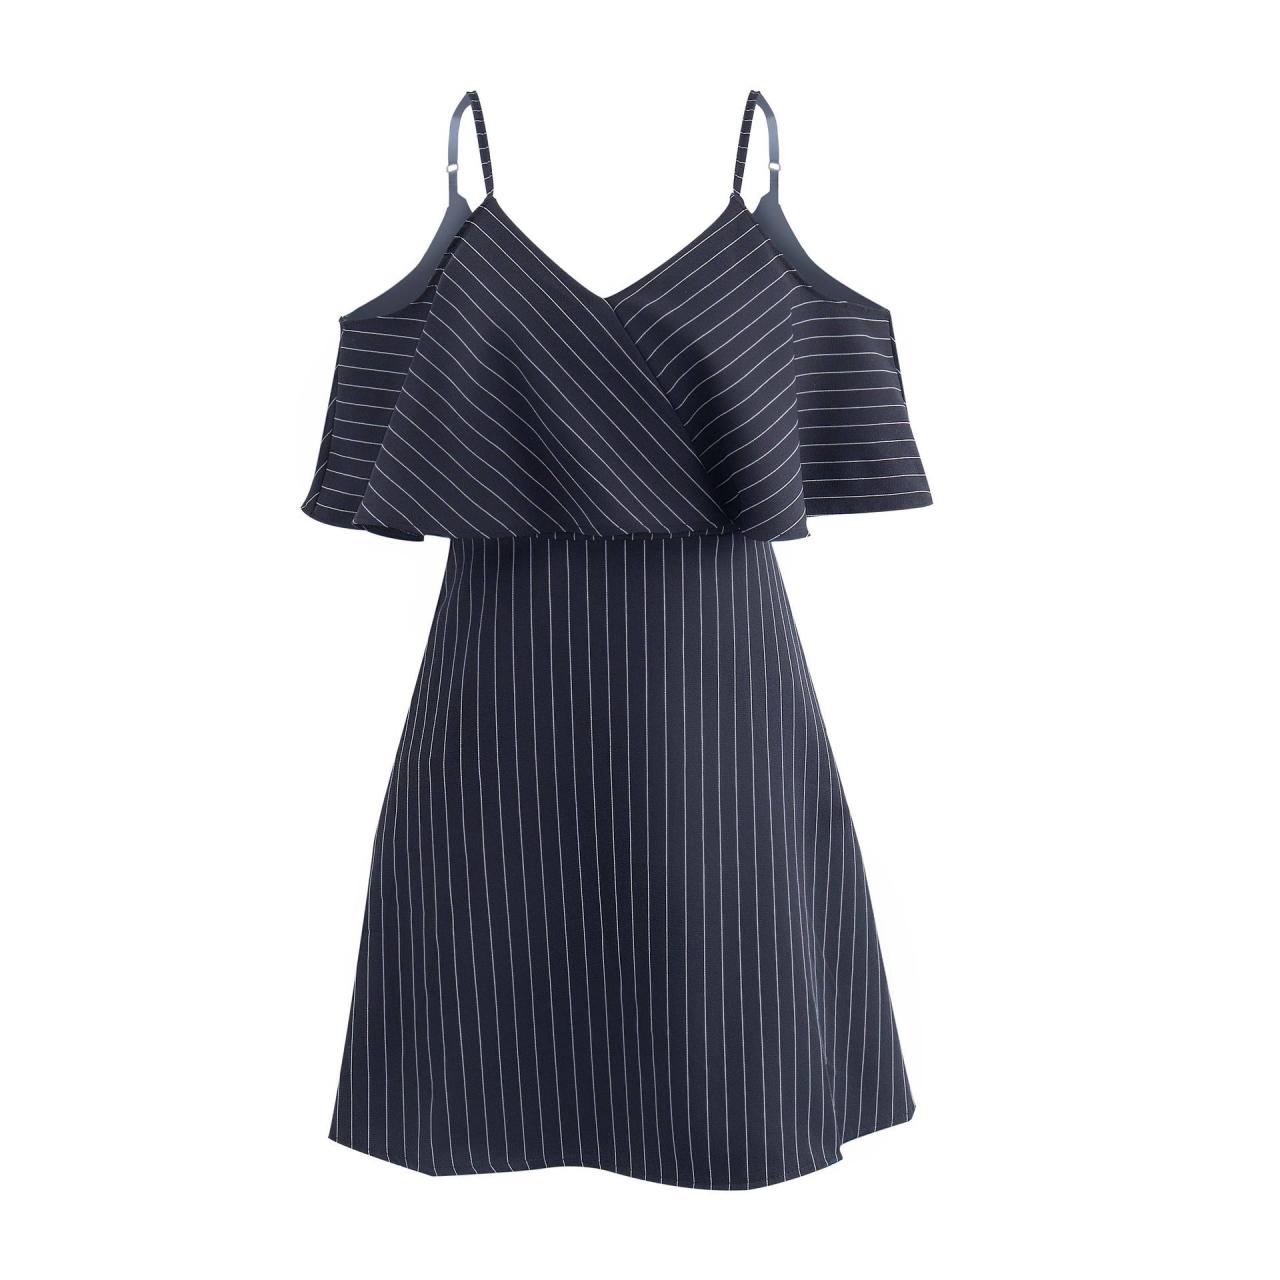 Women Striped Dress Summer Spaghetti Straps Sleeveless Casual Slim Mini A Line Club Party Dress black